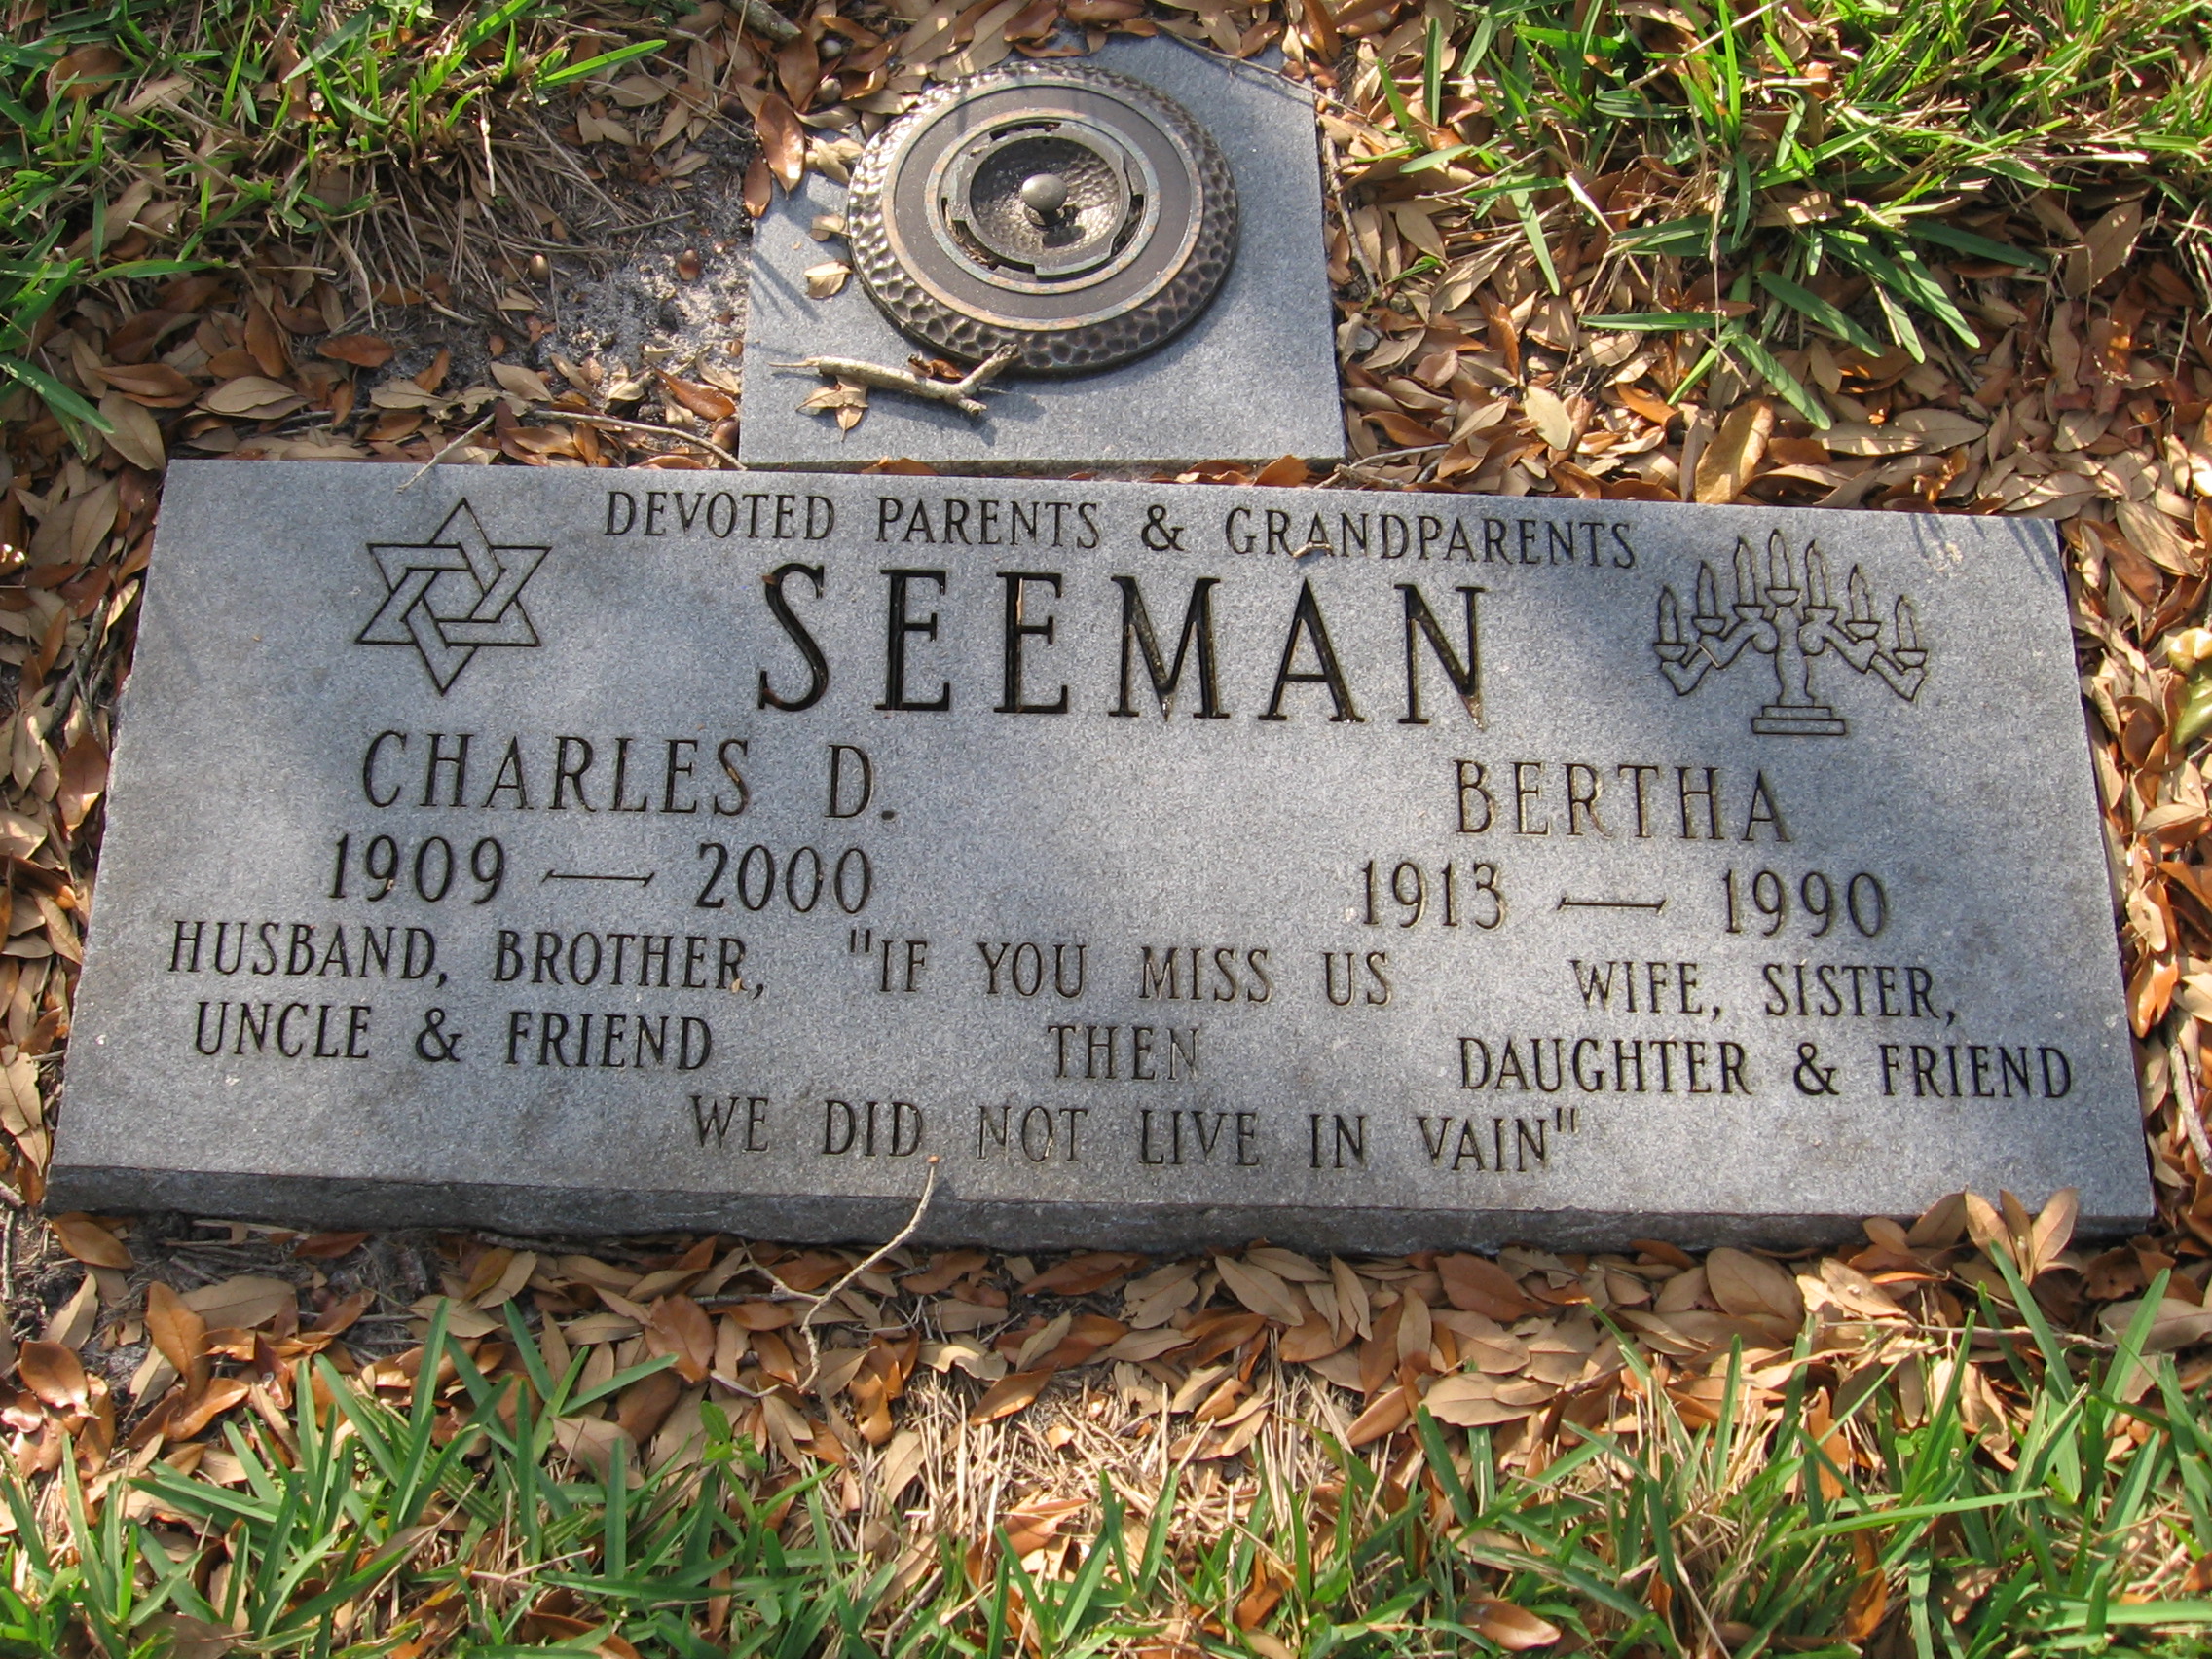 Bertha Seeman